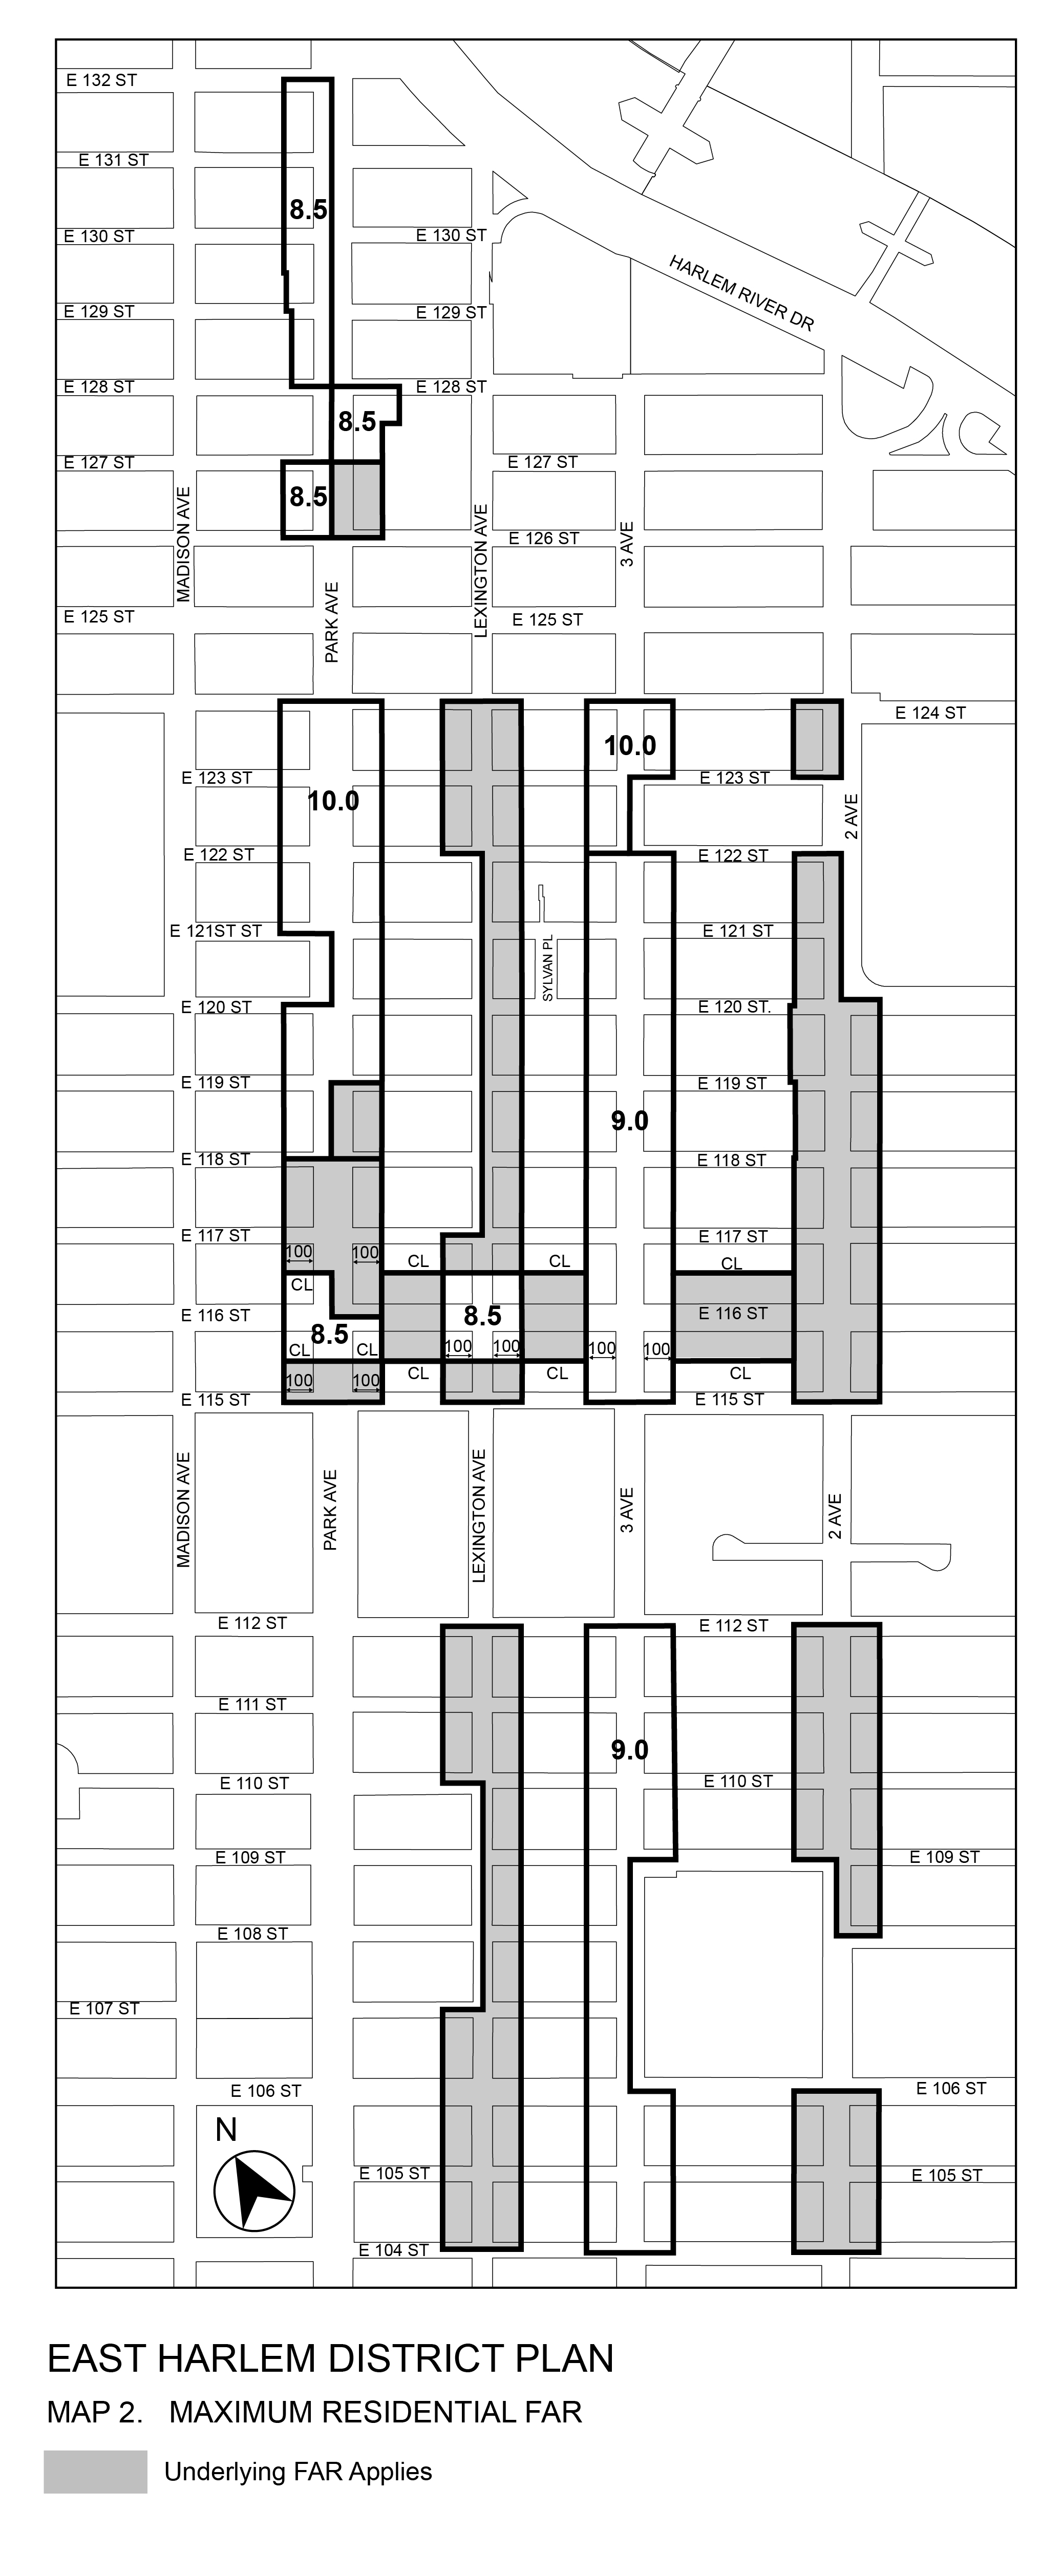 Art XIII Ch 8_Special East Harlem Corridors District_Appendix_Map 2_Maximum Residential Floor Area Ratio